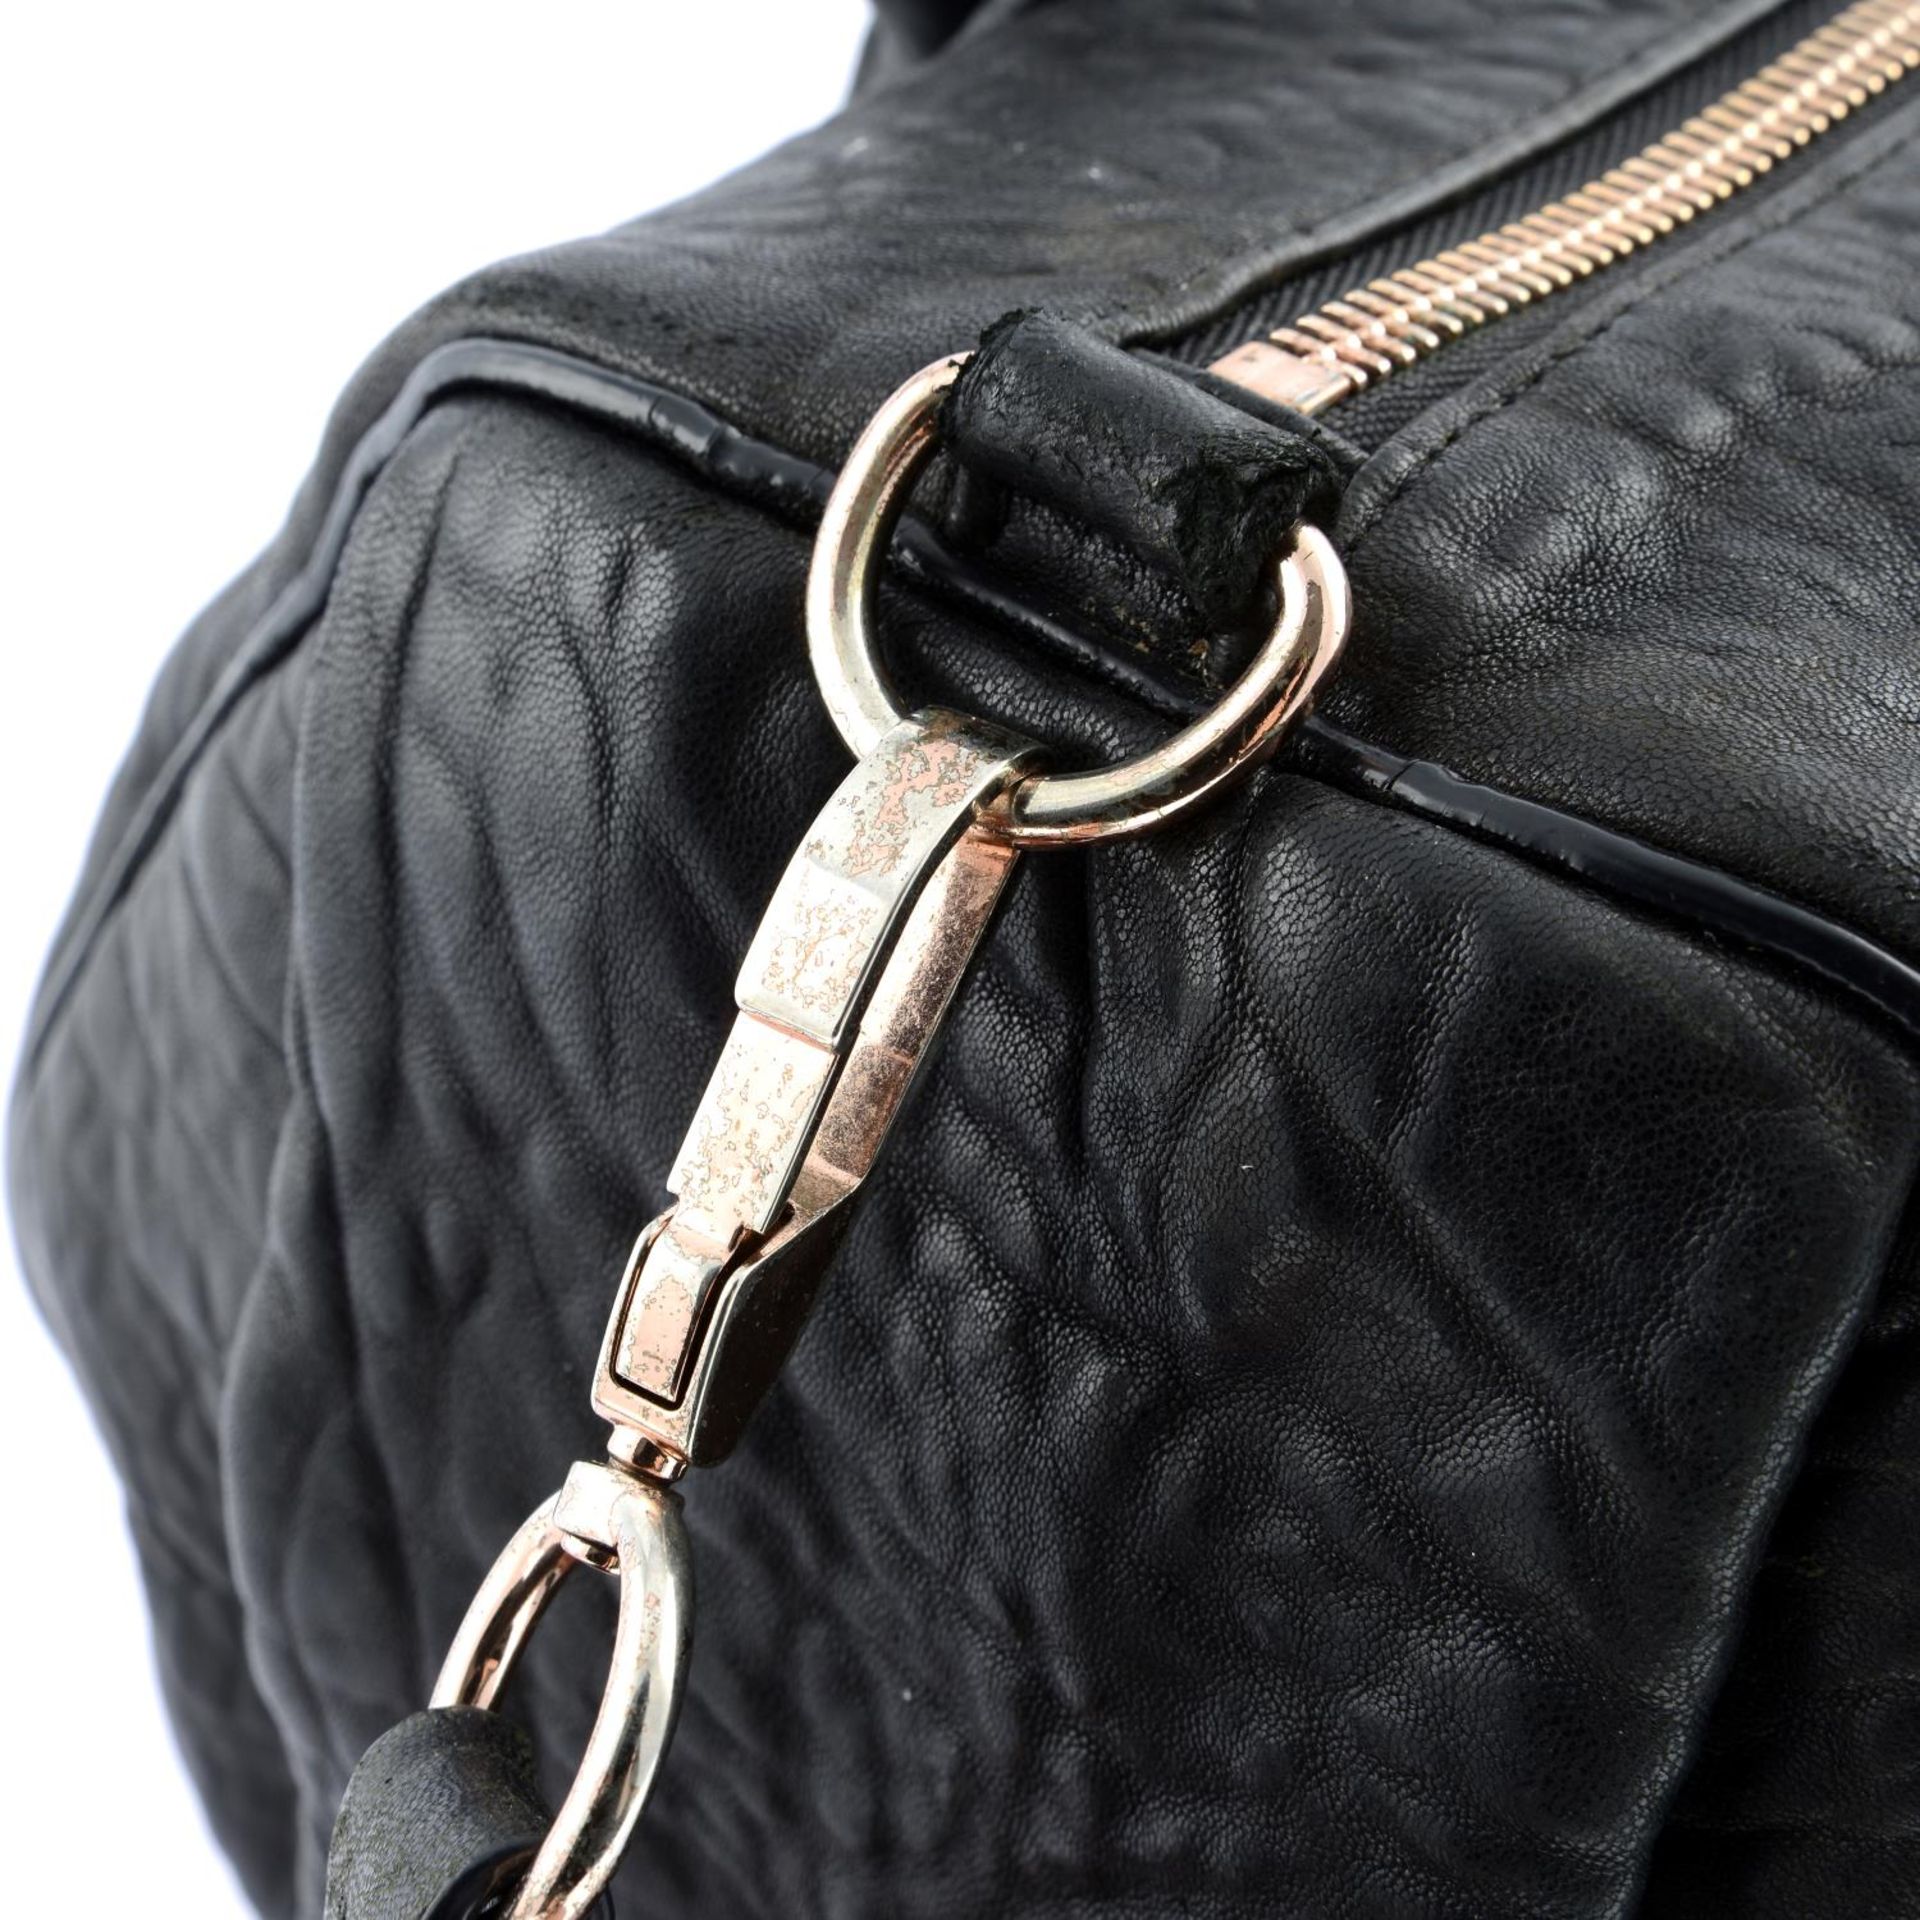 ALEXANDER WANG - a Rocco leather handbag. - Bild 4 aus 7